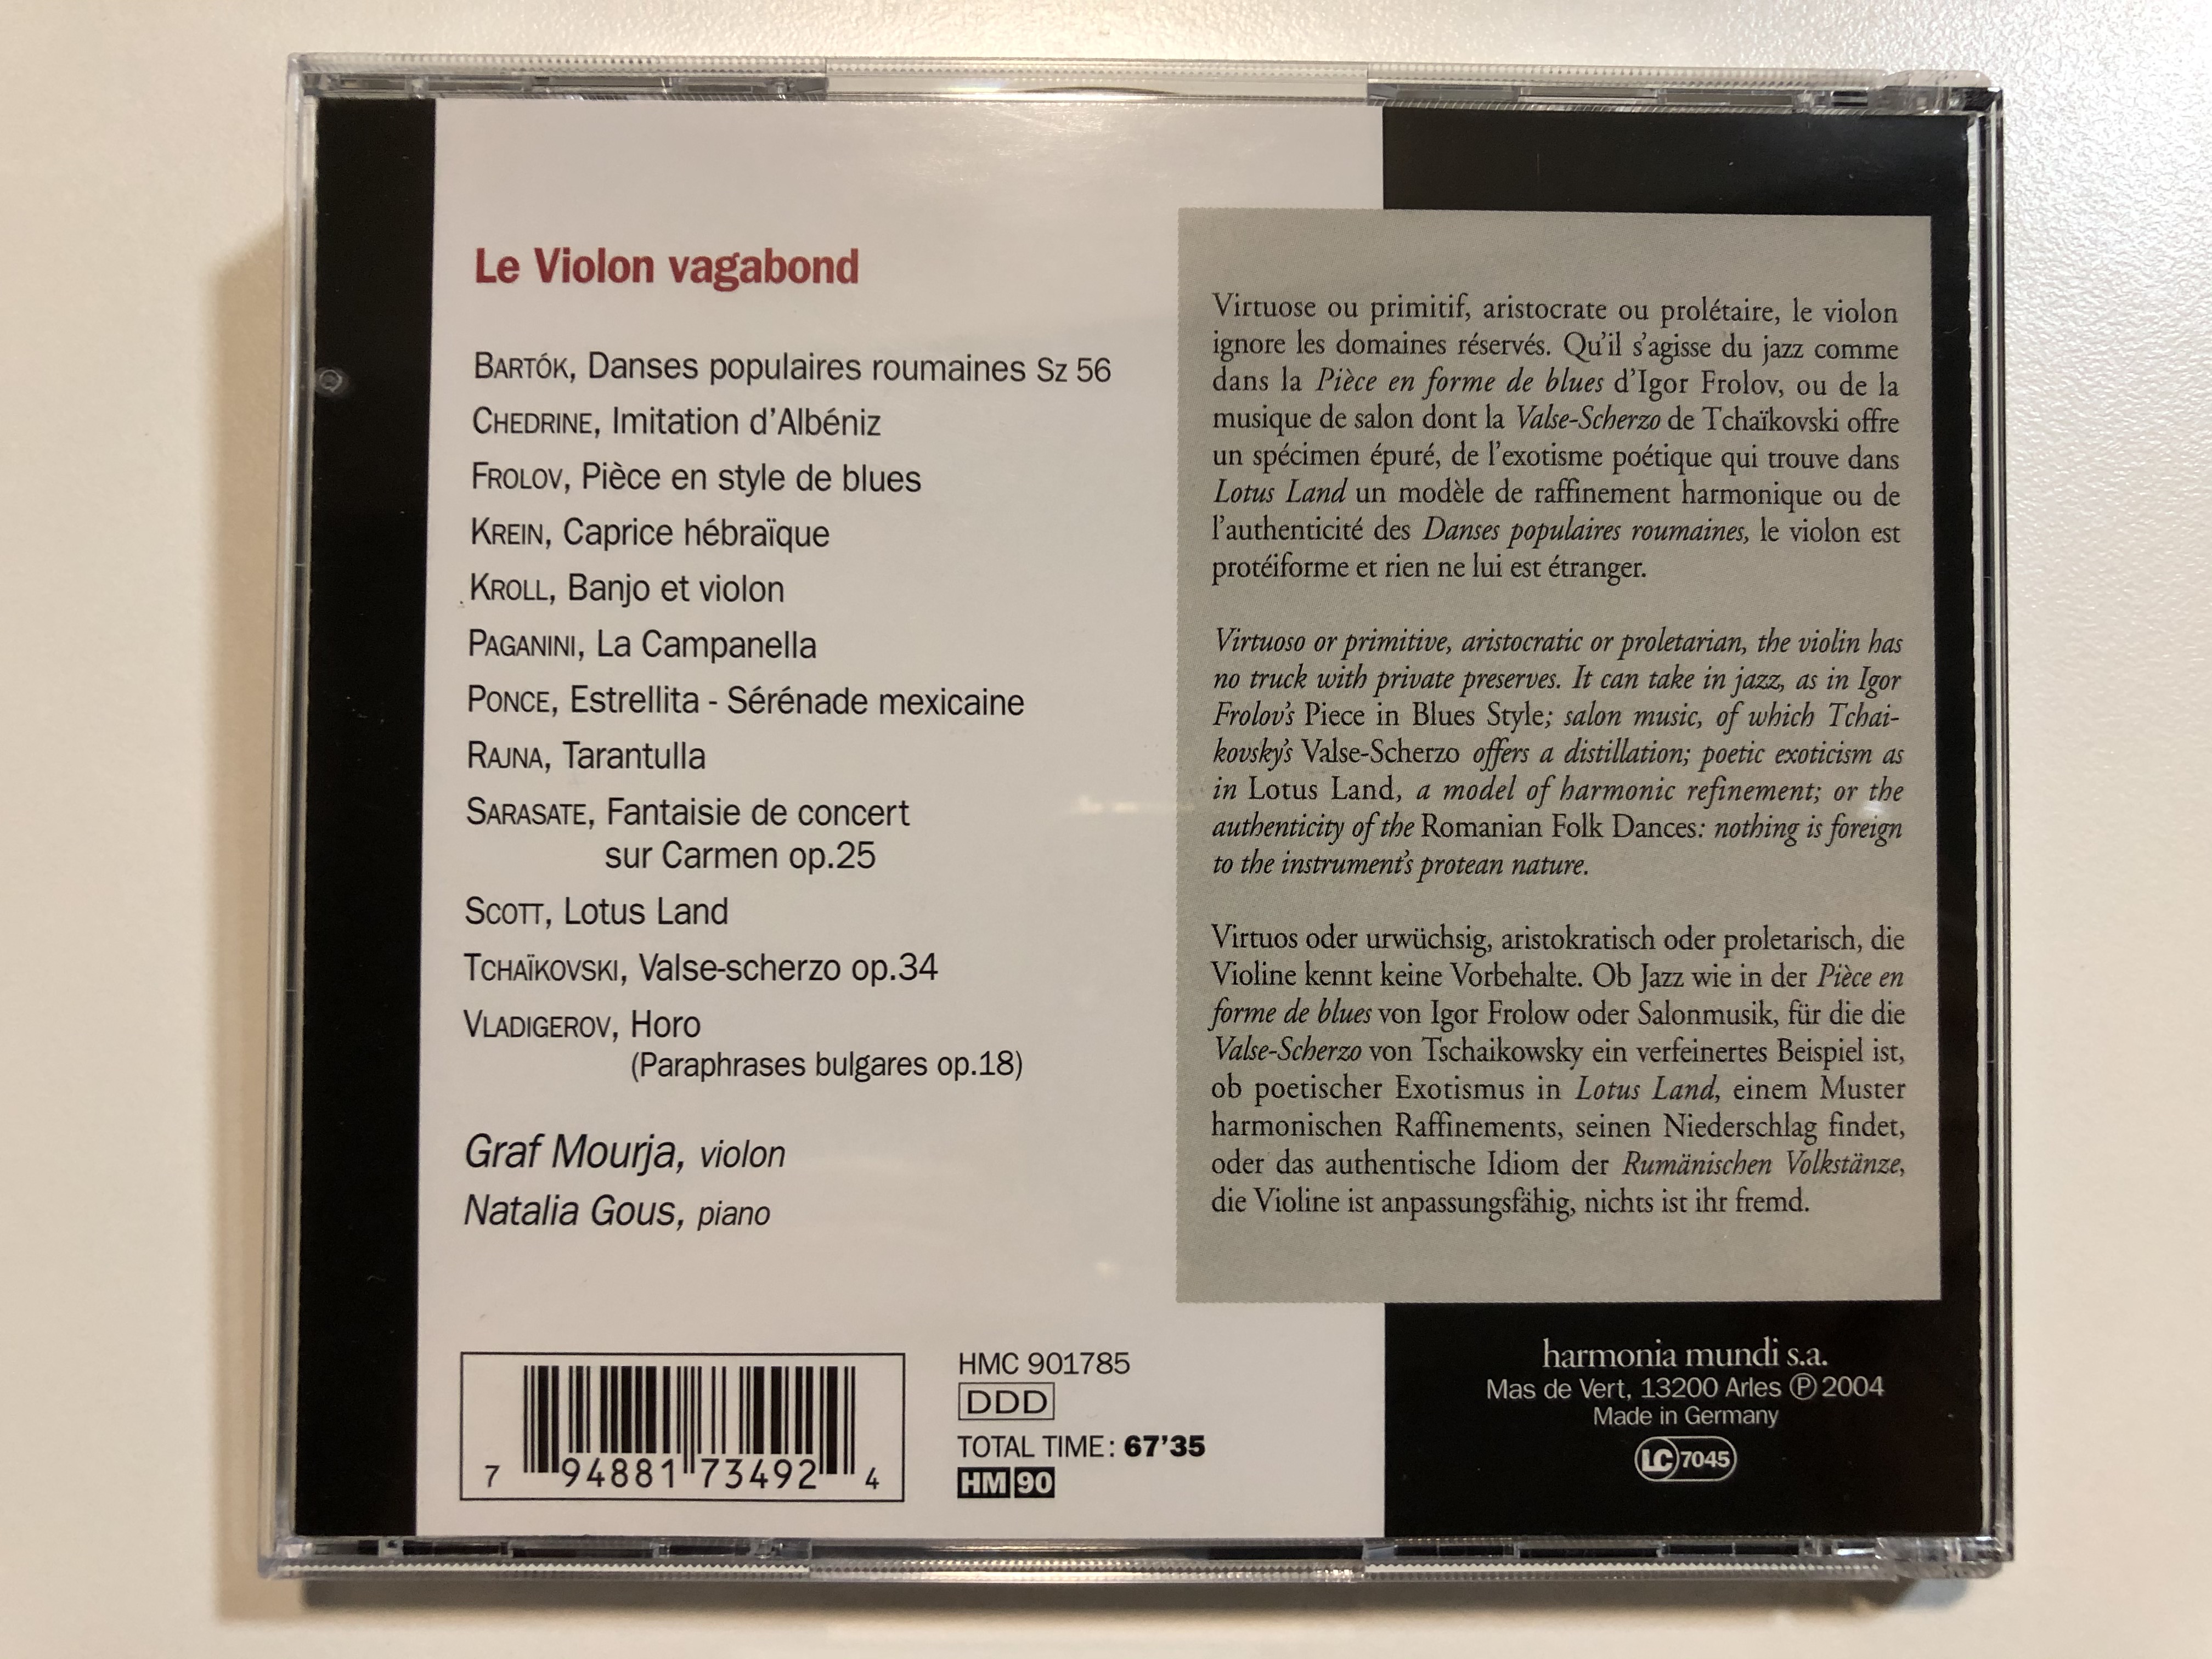 le-violon-vagabond-graf-mourja-violin-natalia-gous-piano-harmonia-mundi-s.a.-audio-cd-2004-hmc-901785-8-.jpg